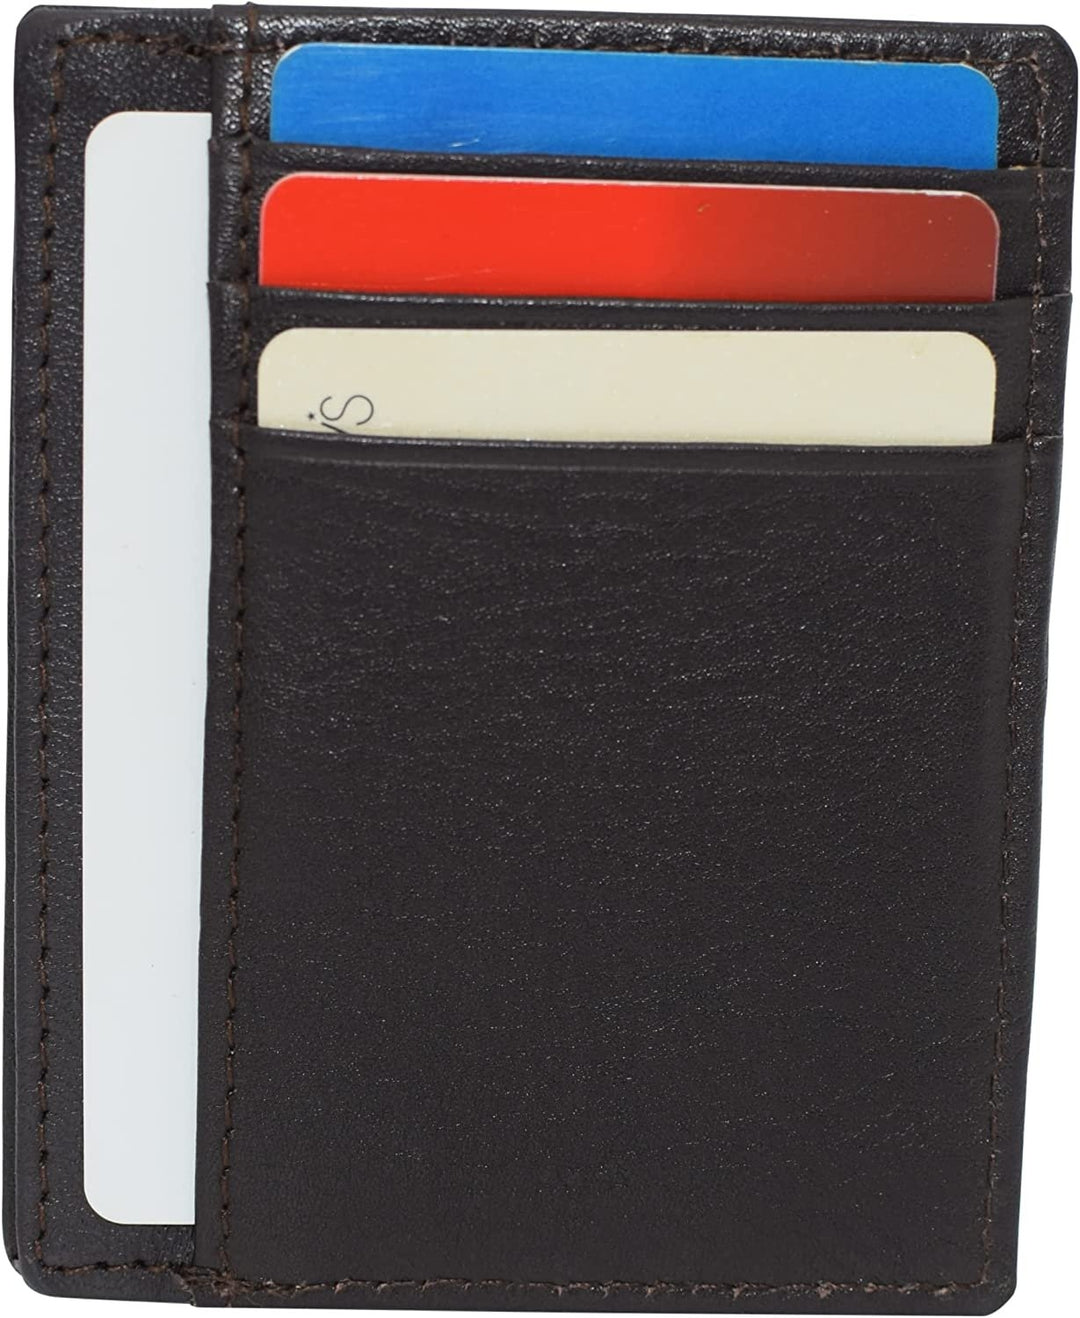 Swiss Marshall RFID Blocking Front Pocket Leather Slim Credit Card Case Holder Wallet Image 6